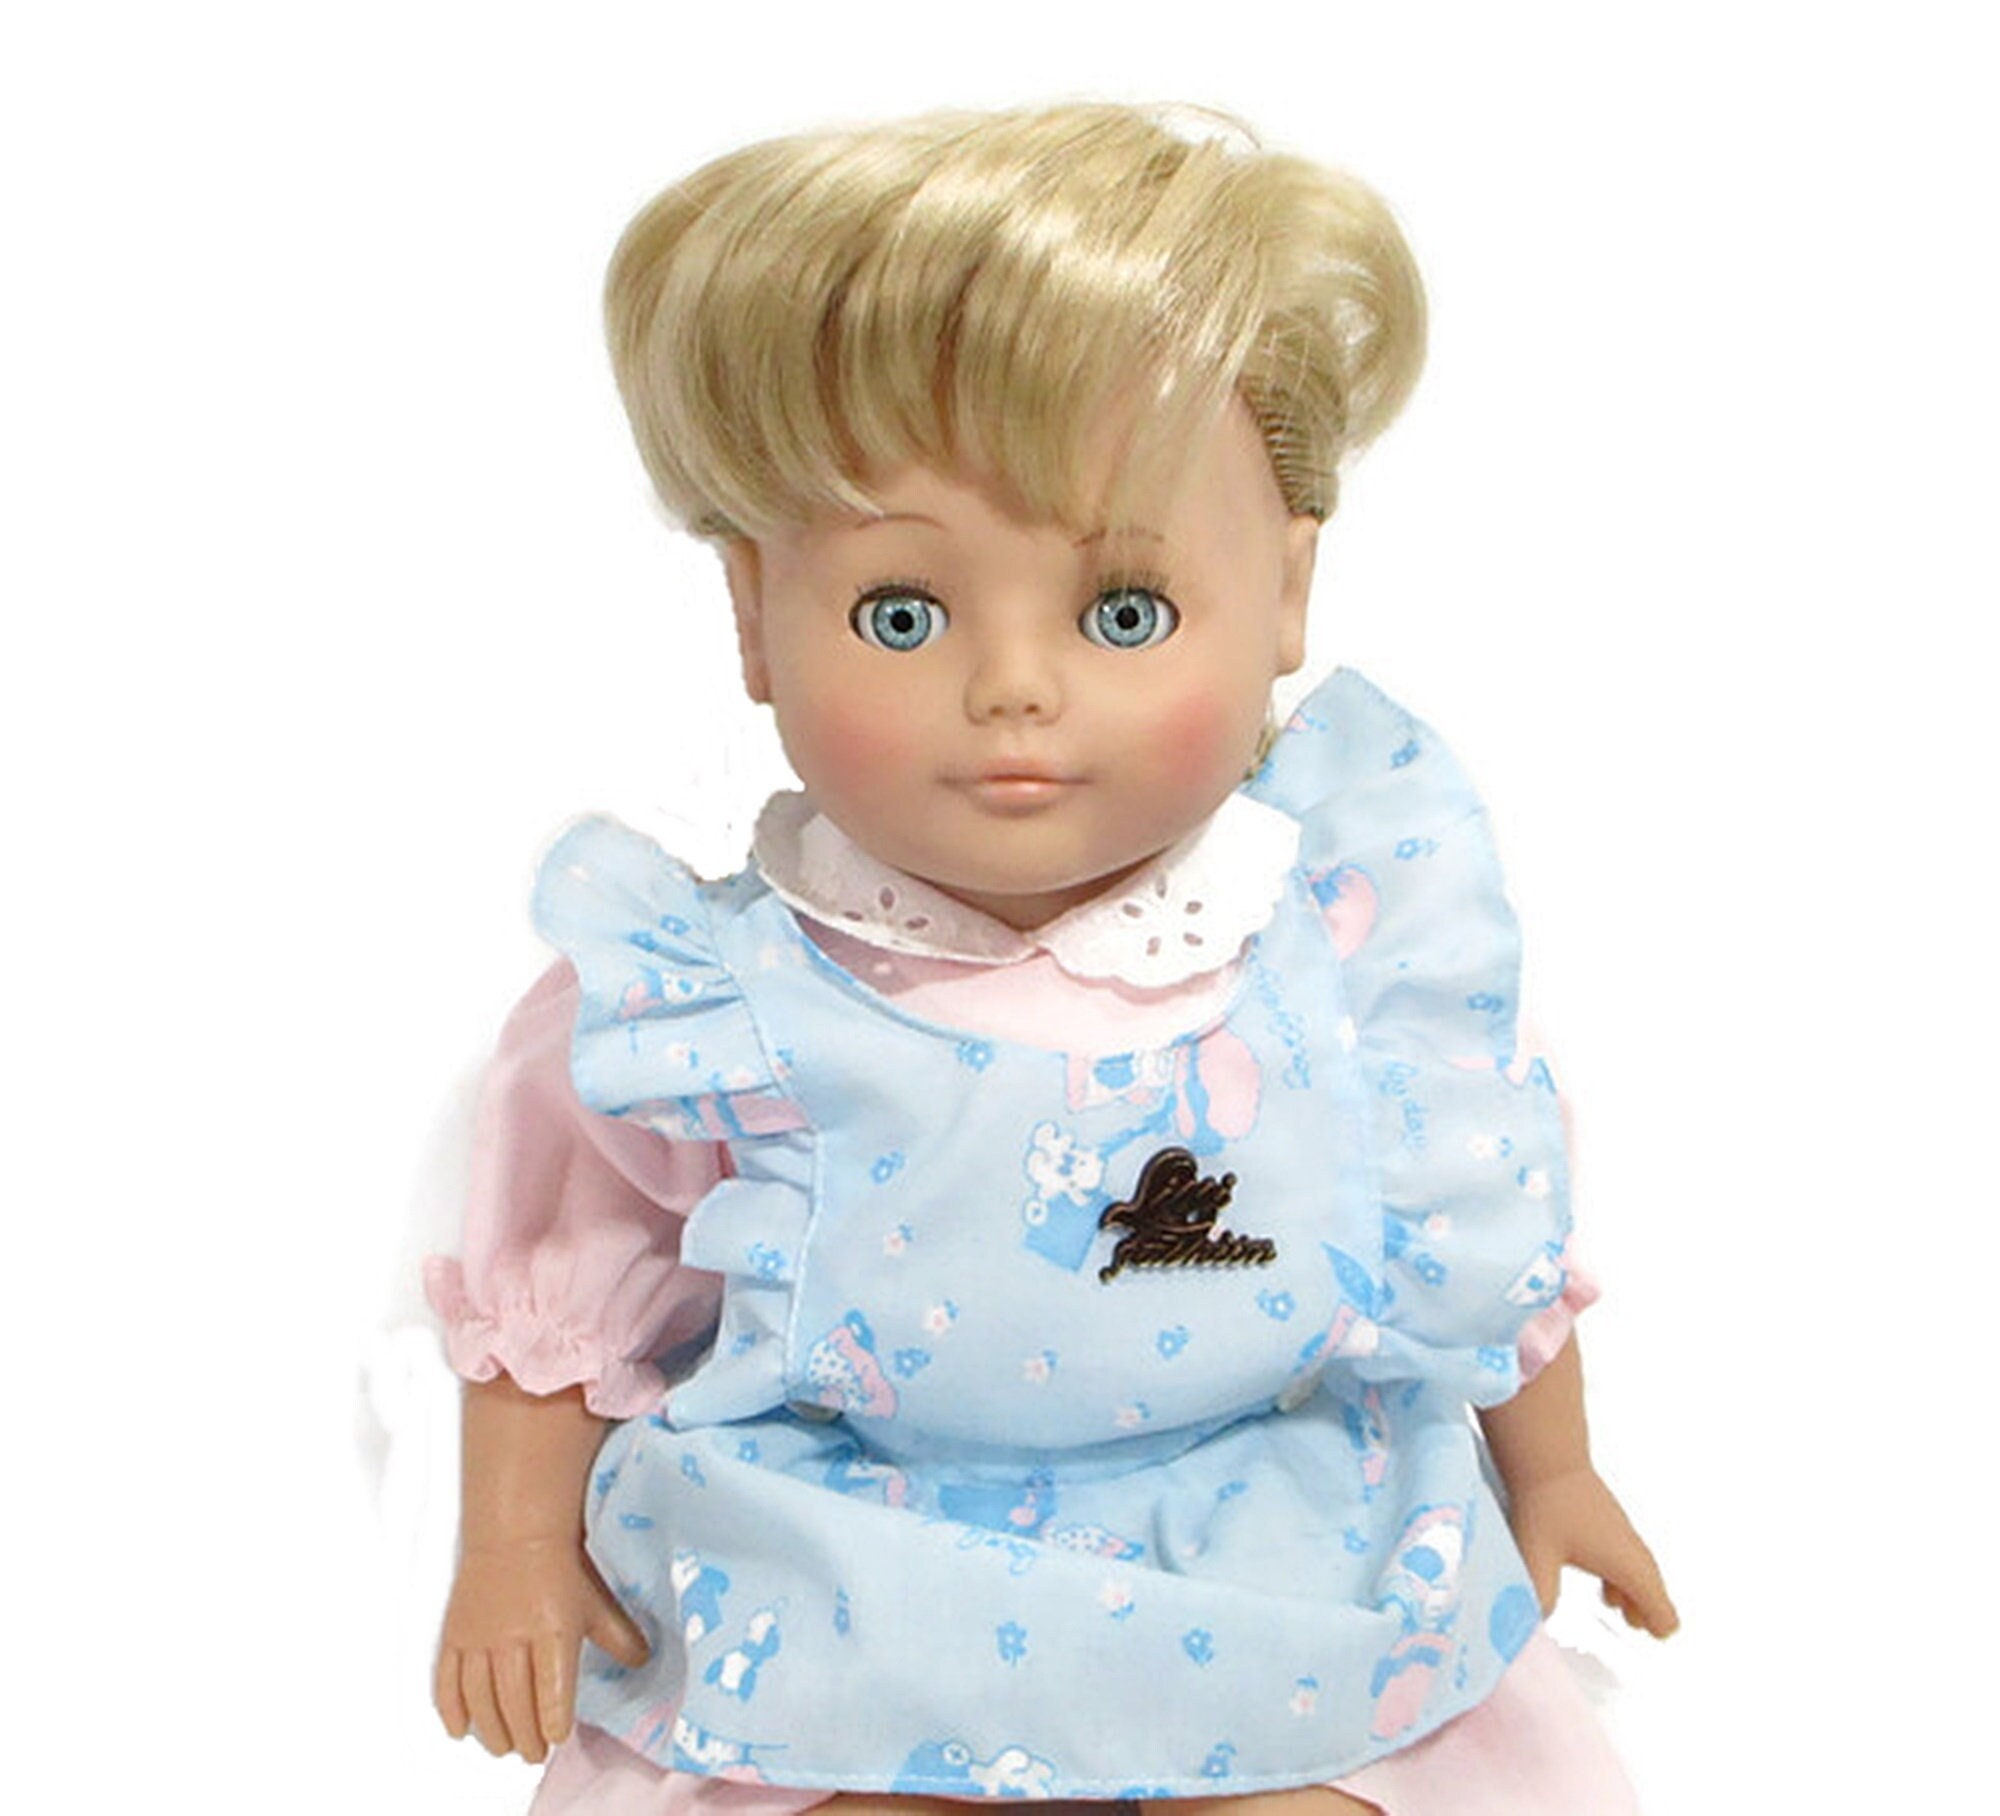 1980s Blond Doll 